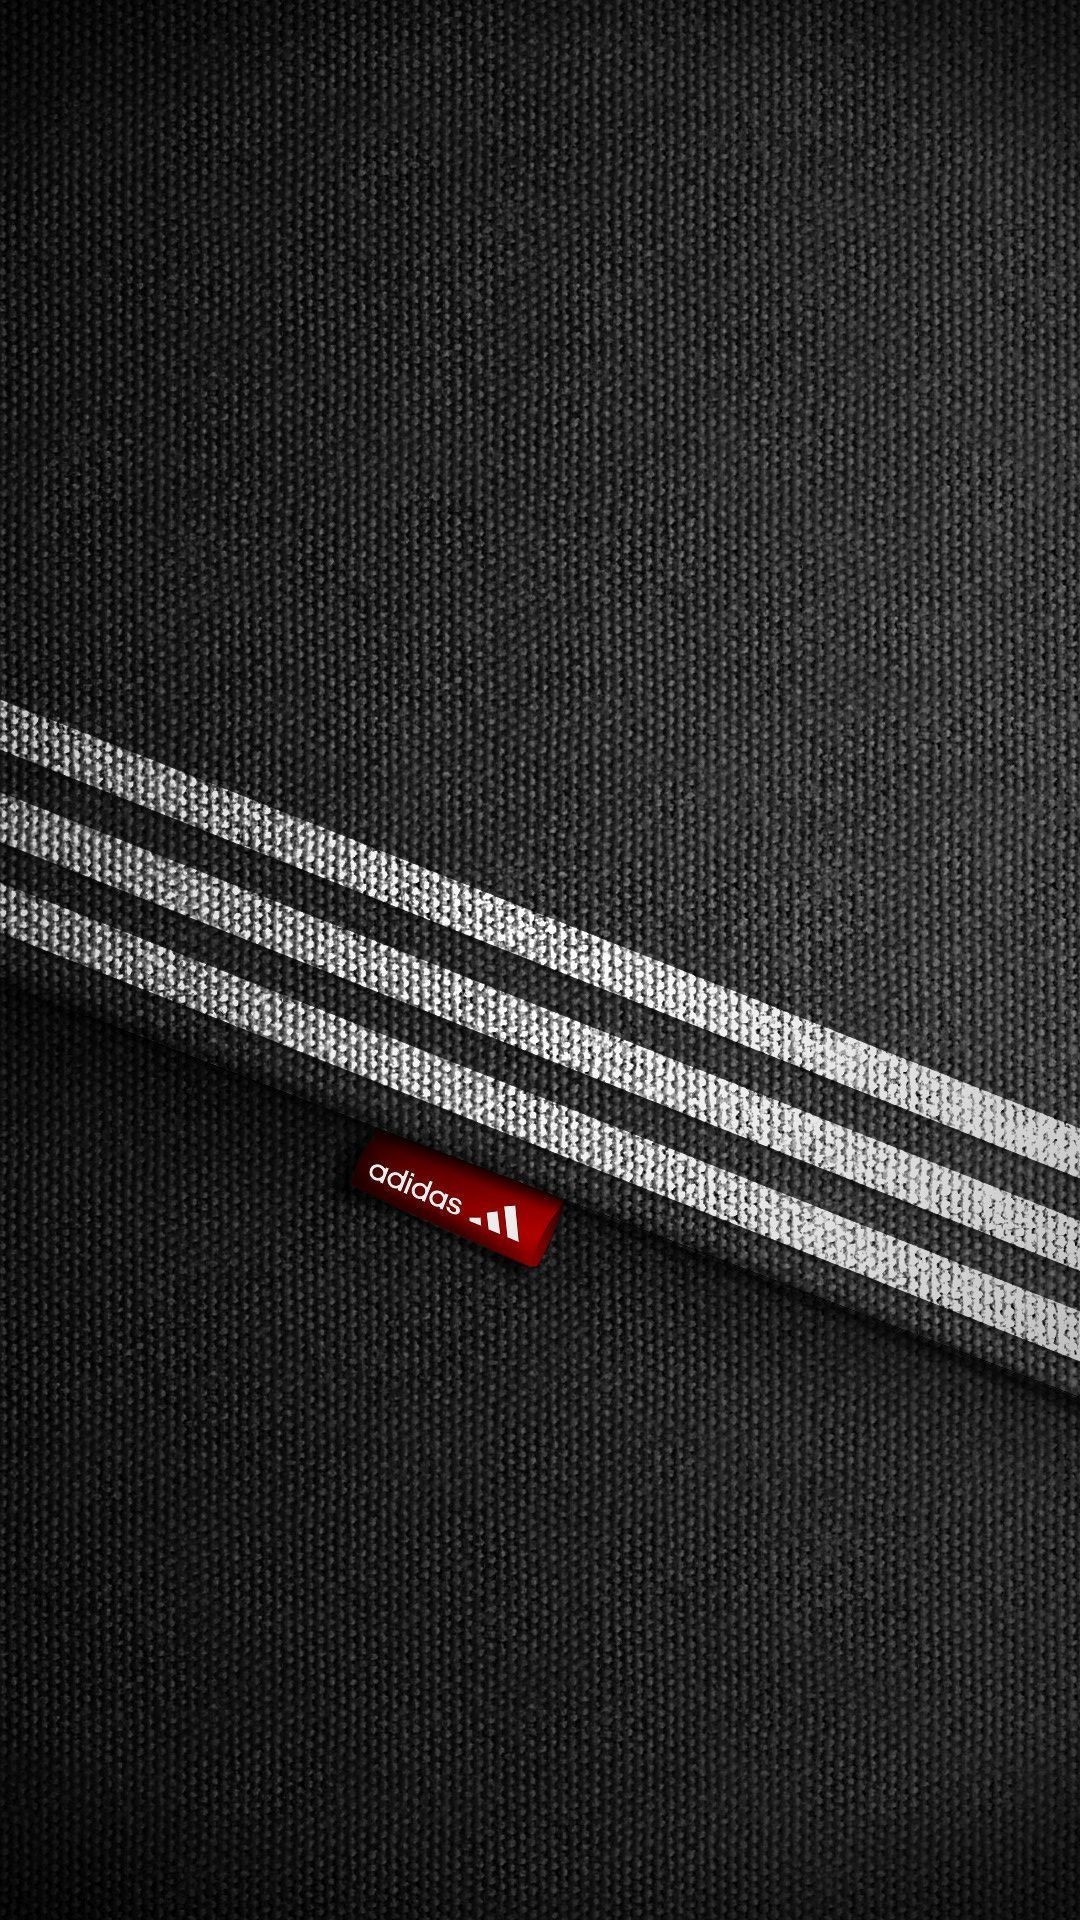 Adidas Iphone X Wallpaper Off 62 Www Otuzaltinciparalel Com